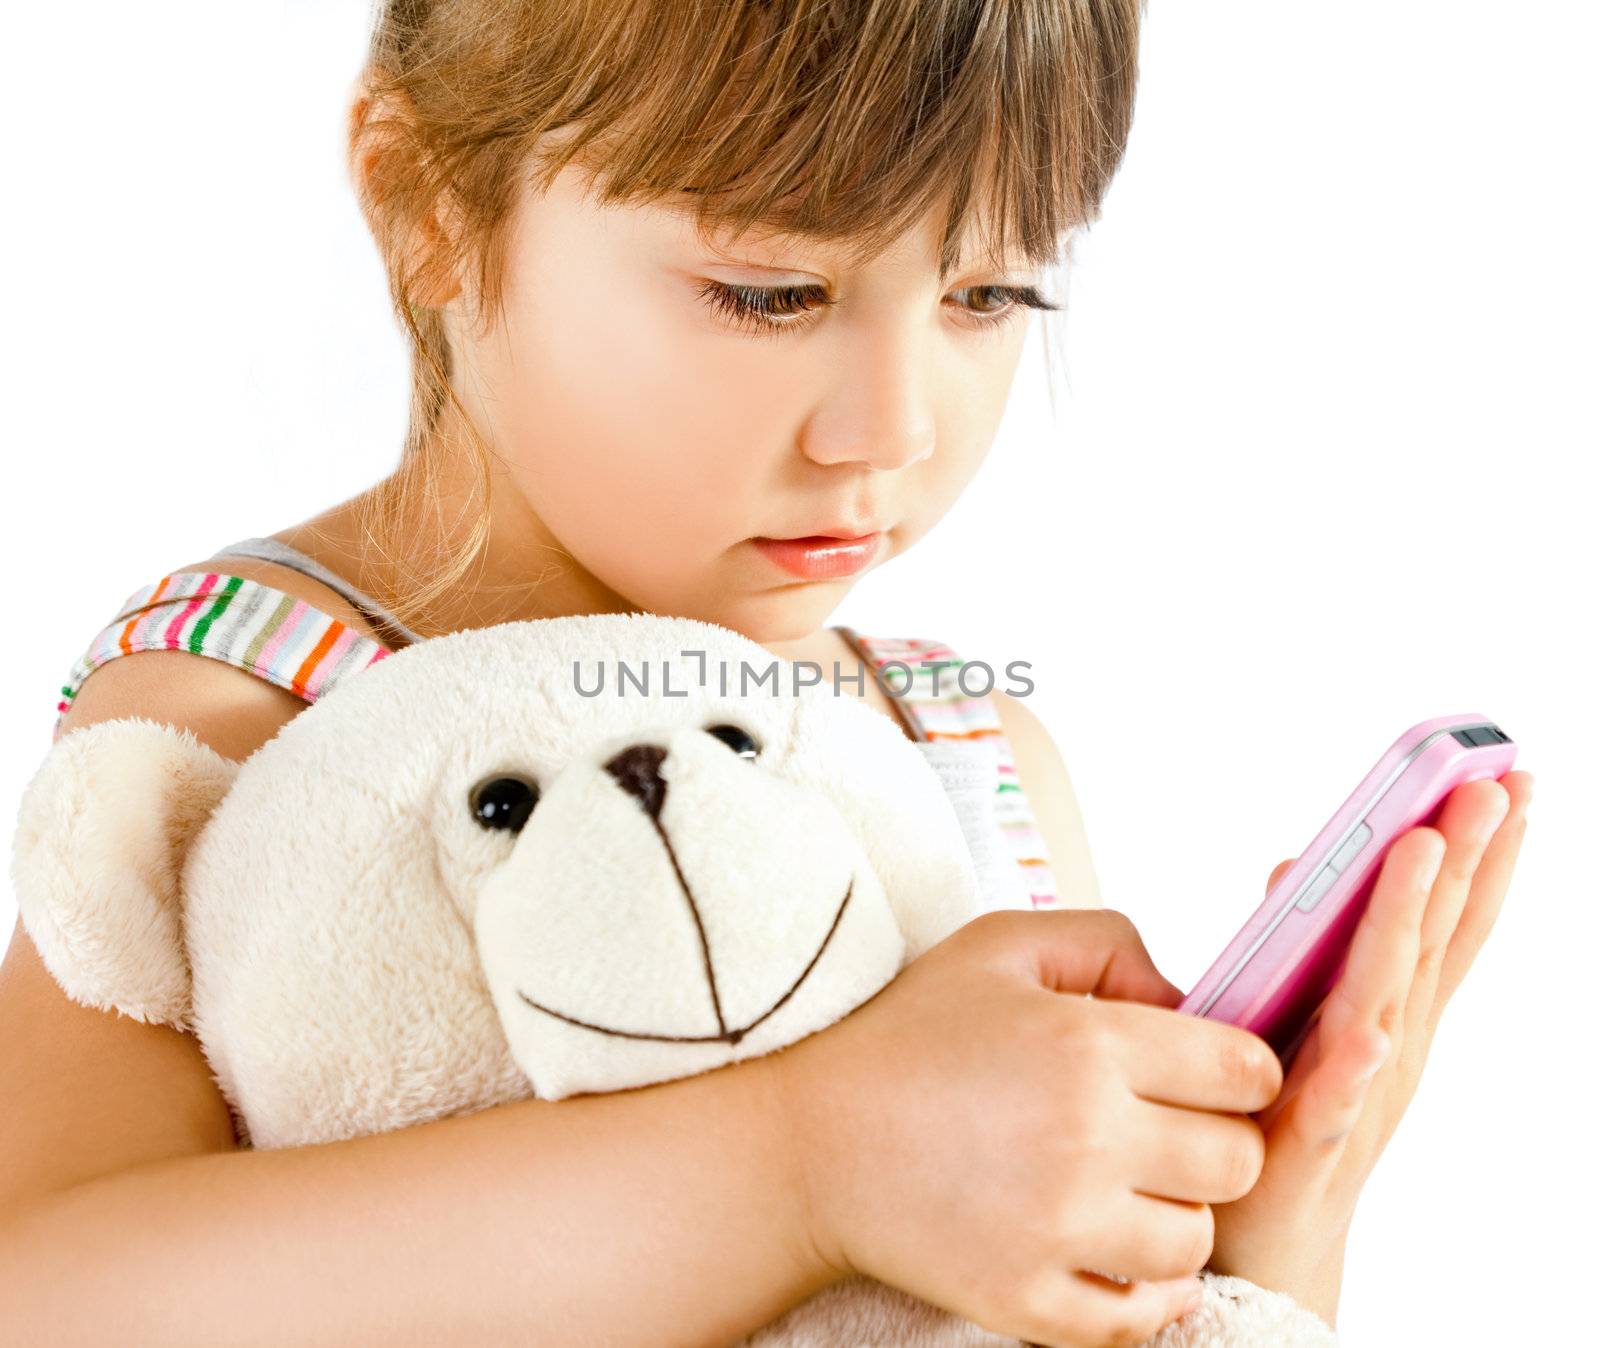 Sweet little girl cuddling teddy bear holding pink mobile phone, isolated on white